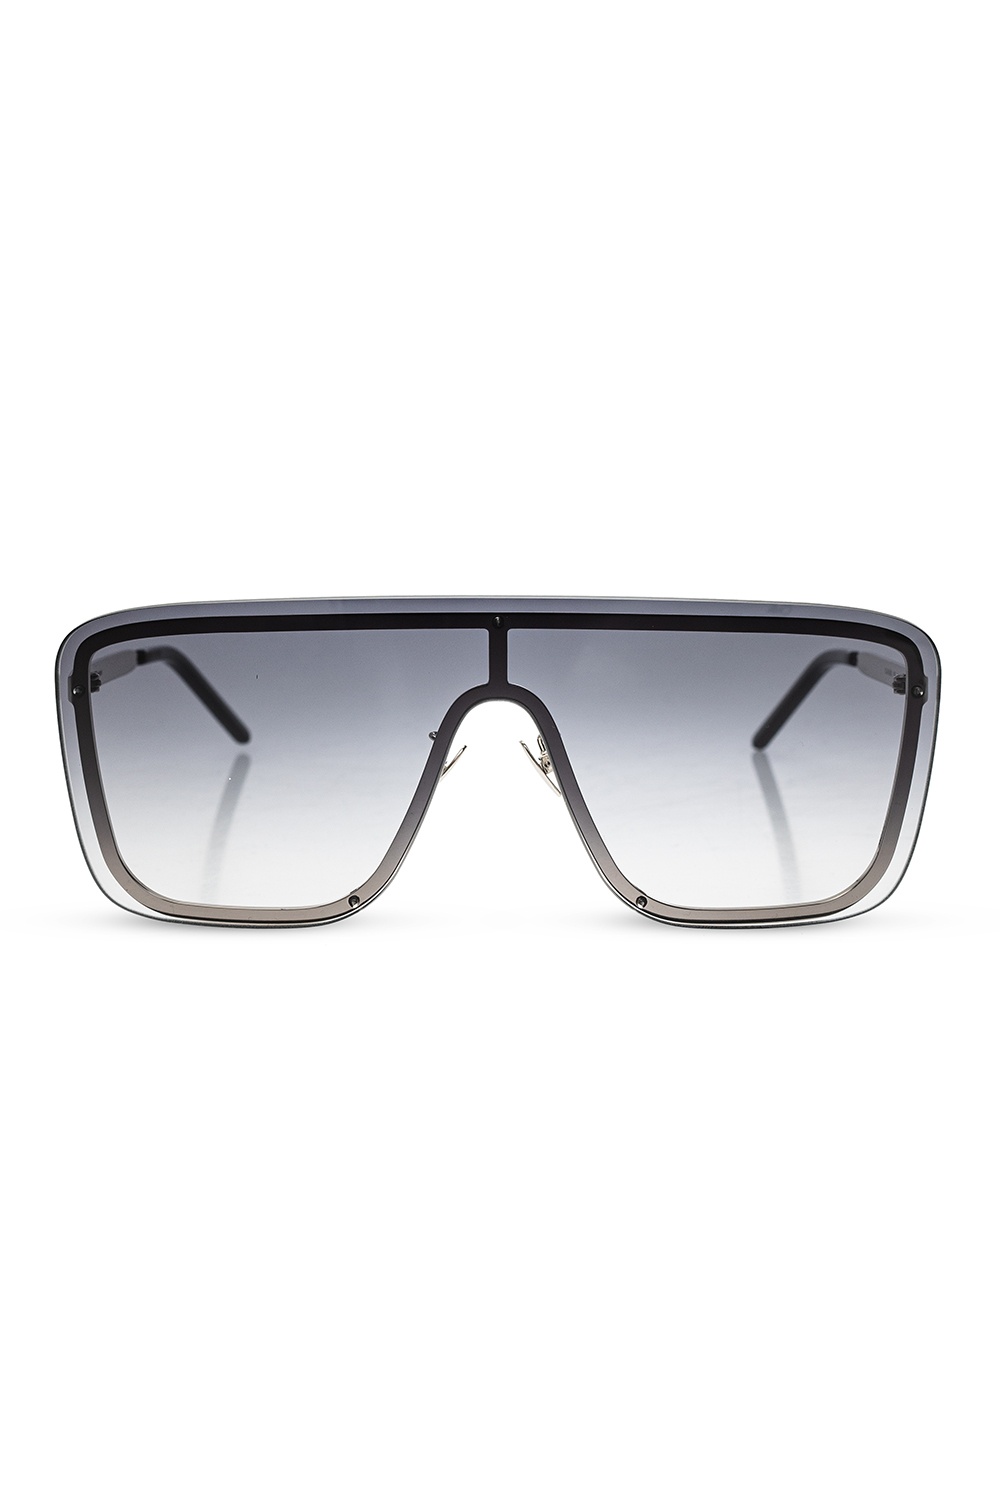 Saint Laurent 'SL 364' sunglasses, Balmain Eyewear square-frame sunglasses, Women's Accessories